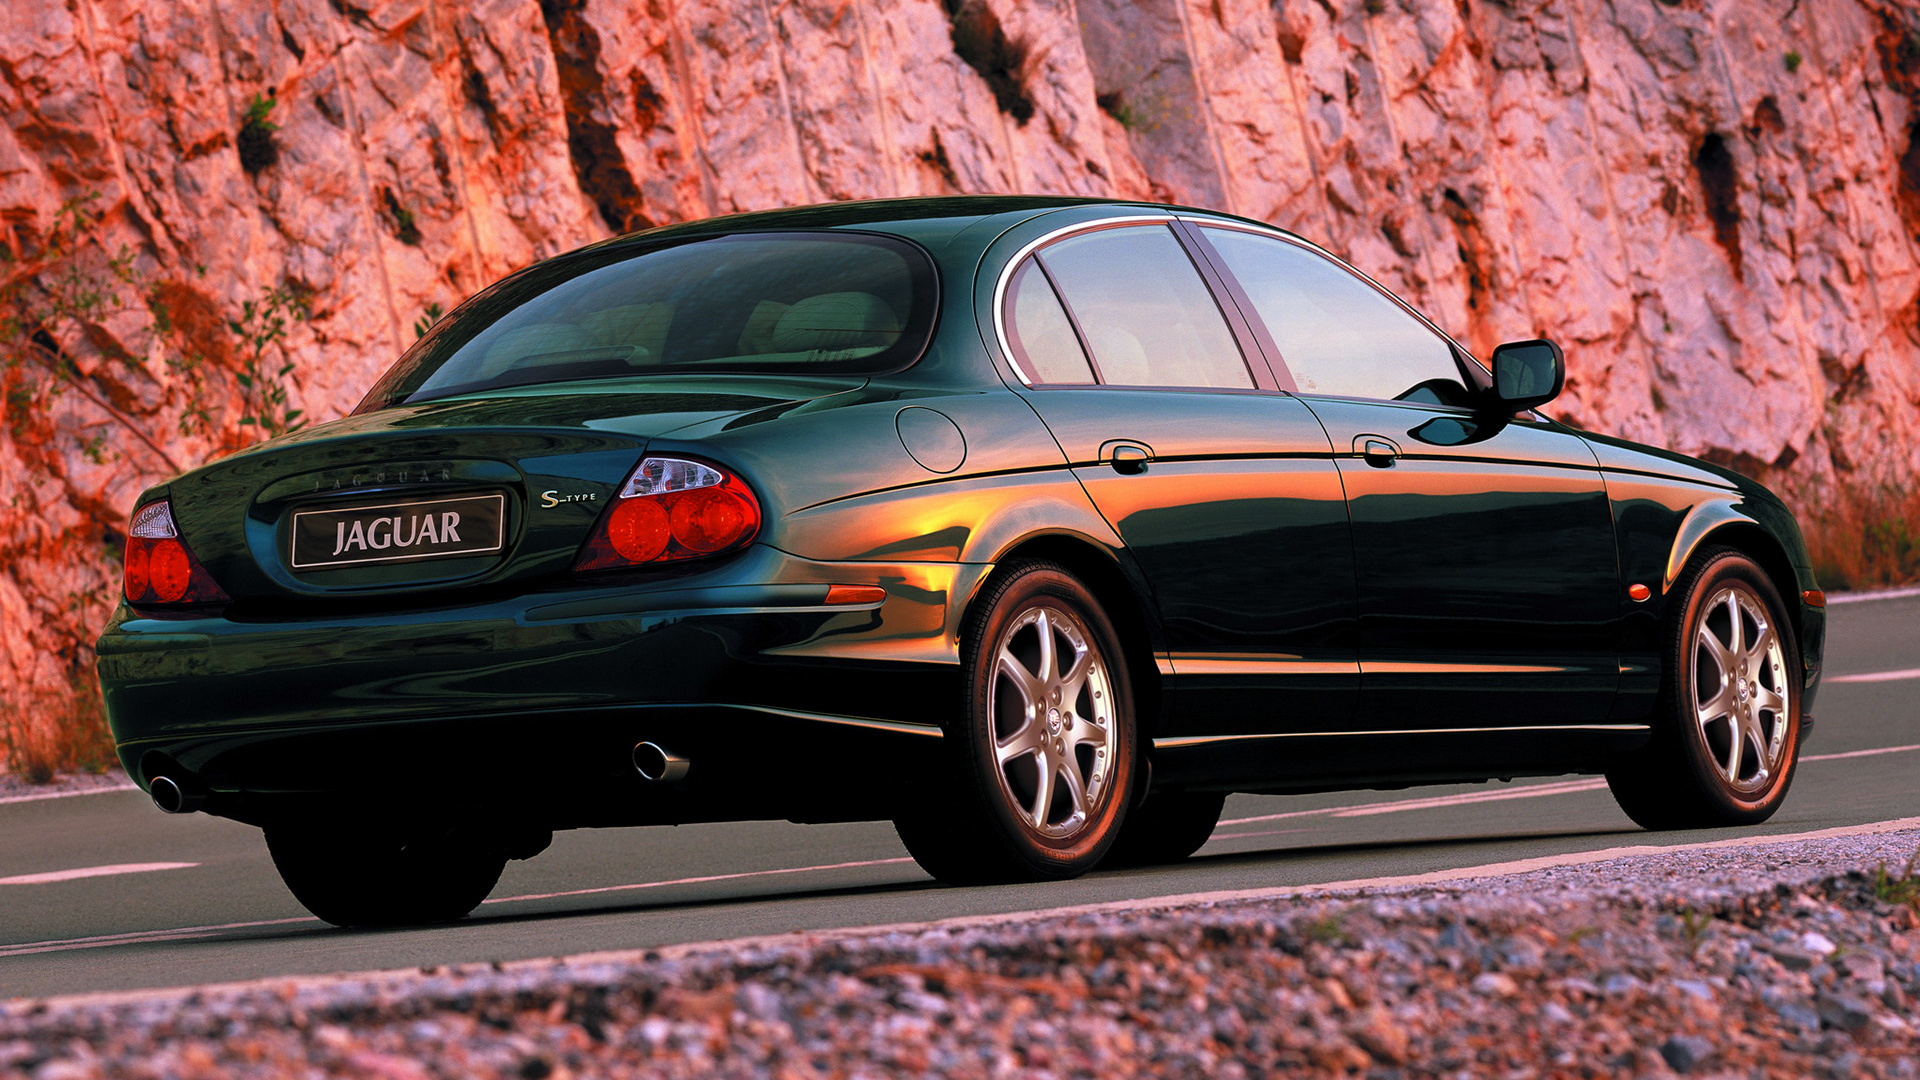 Jaguar S-Type (1999) Wallpapers and HD Images - Car Pixel